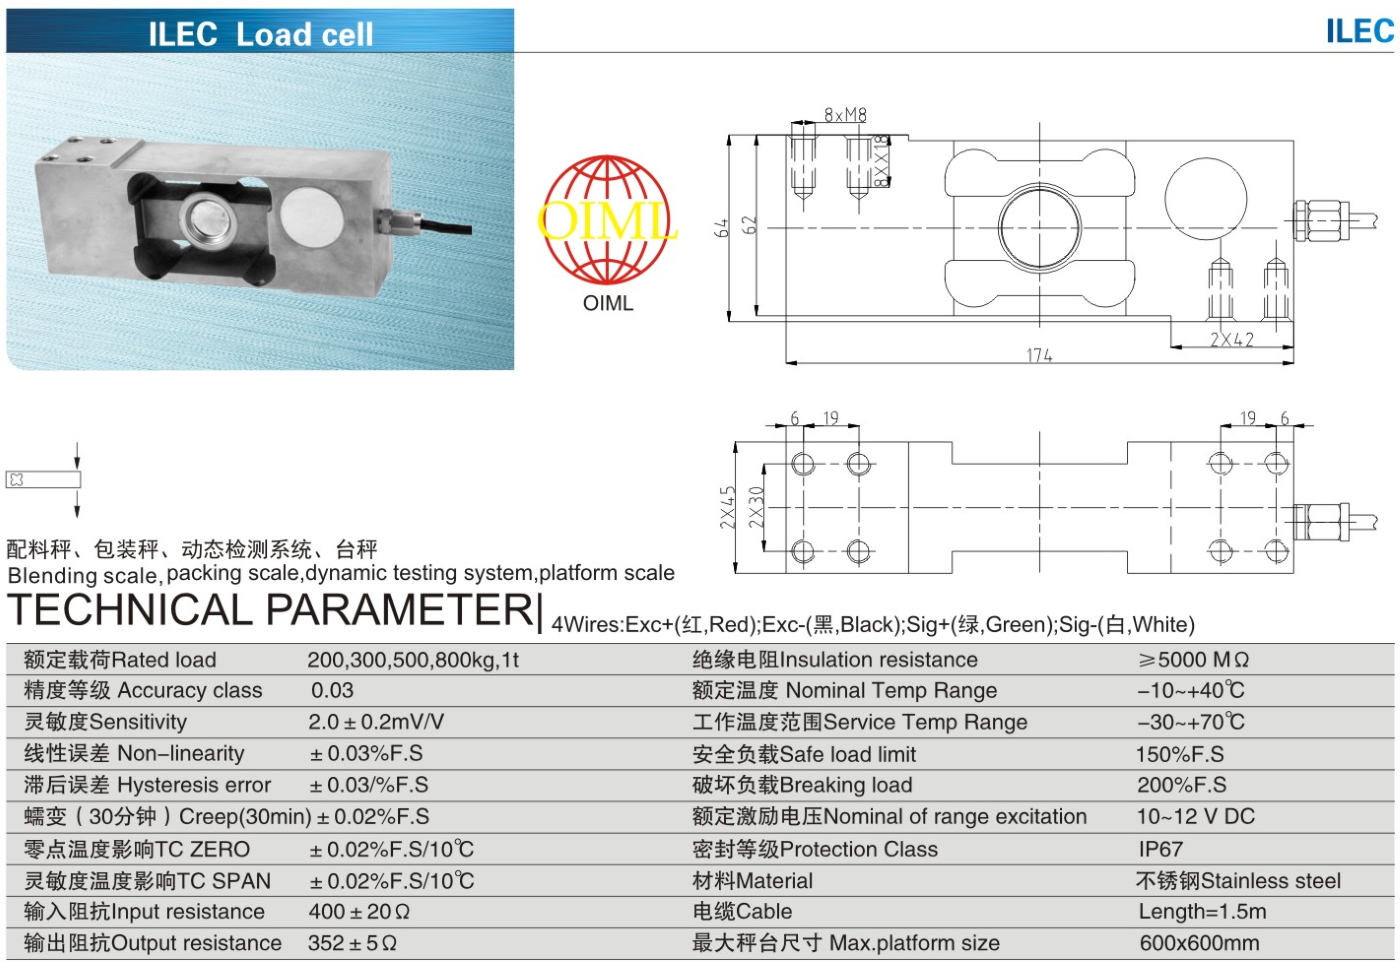 img/loadcell-images/alloysteel-singlepoint/KELI_ILEC_Loadcell-TTM_Teknoloji.jpg